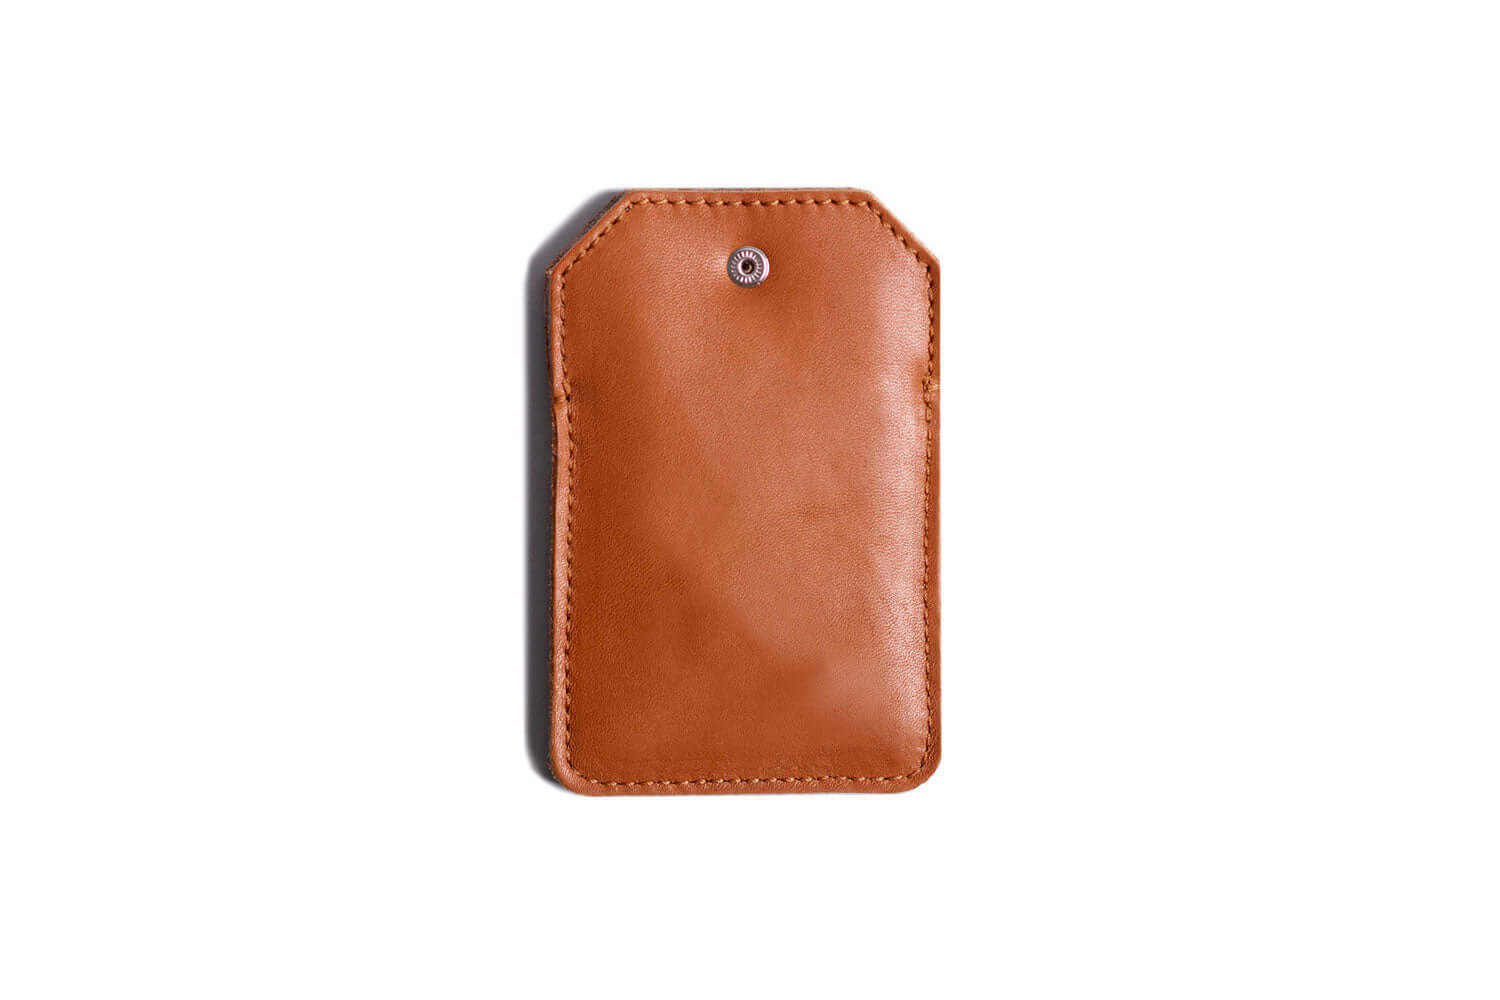 Emraw Index Card Case File Holder Snap Button Closure 3 x 5 Wallet